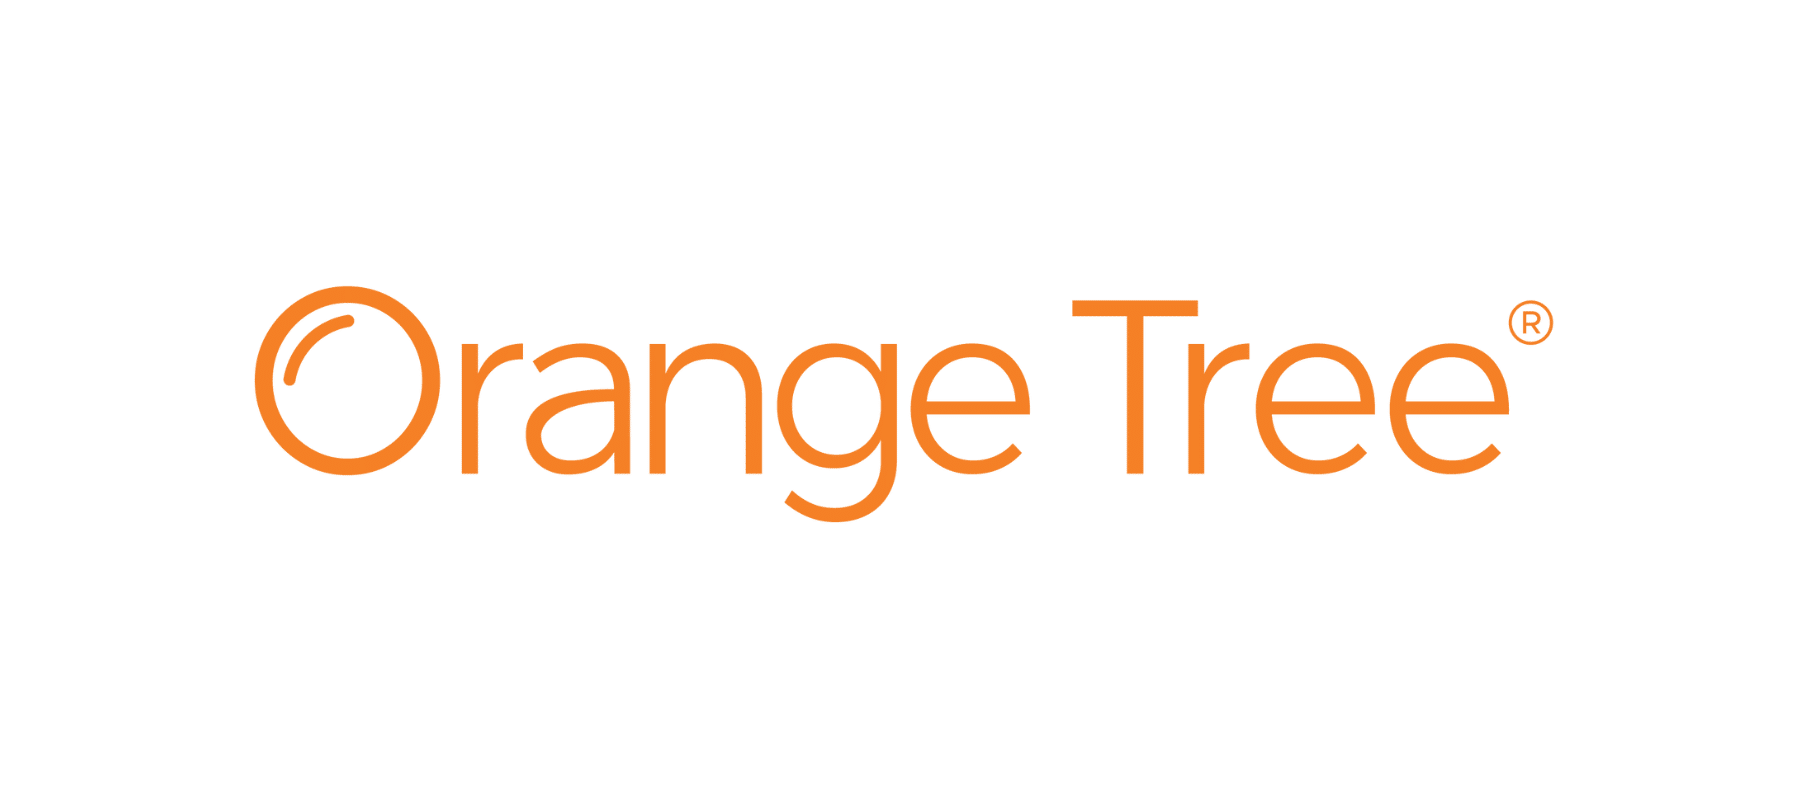 Orange Tree logo HR background screening